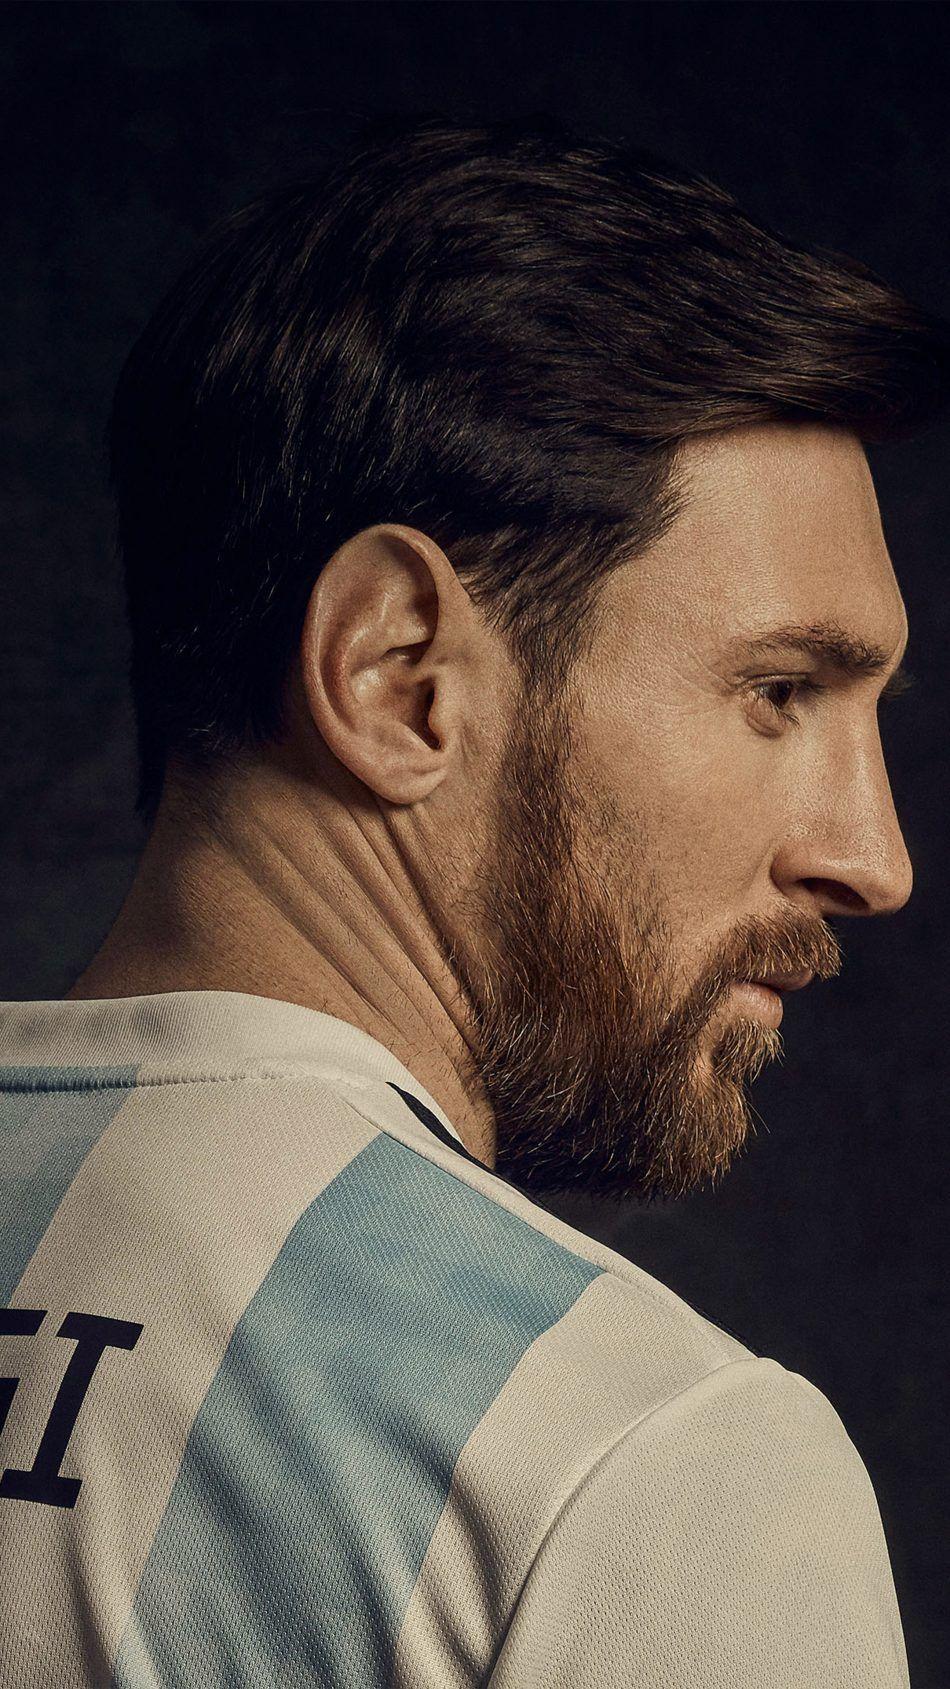 Lionel Messi 2019 4K Ultra HD Mobile Wallpaper. Lionel messi wallpaper, Lionel messi, Lionel messi biography